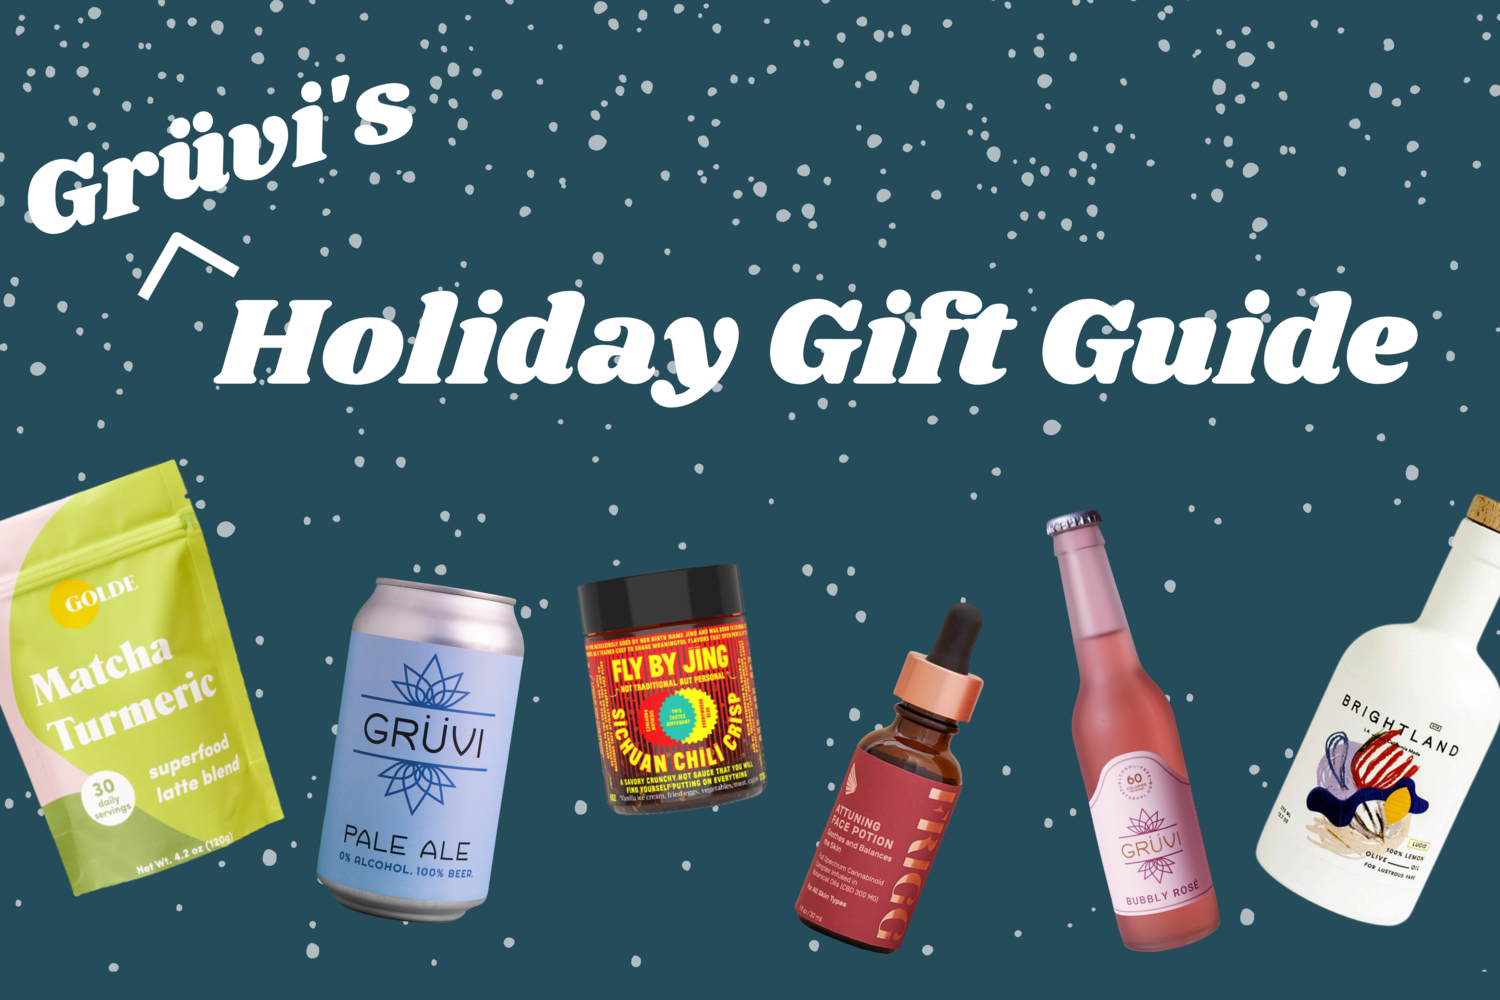 Grüvi's Holiday Gift Guide